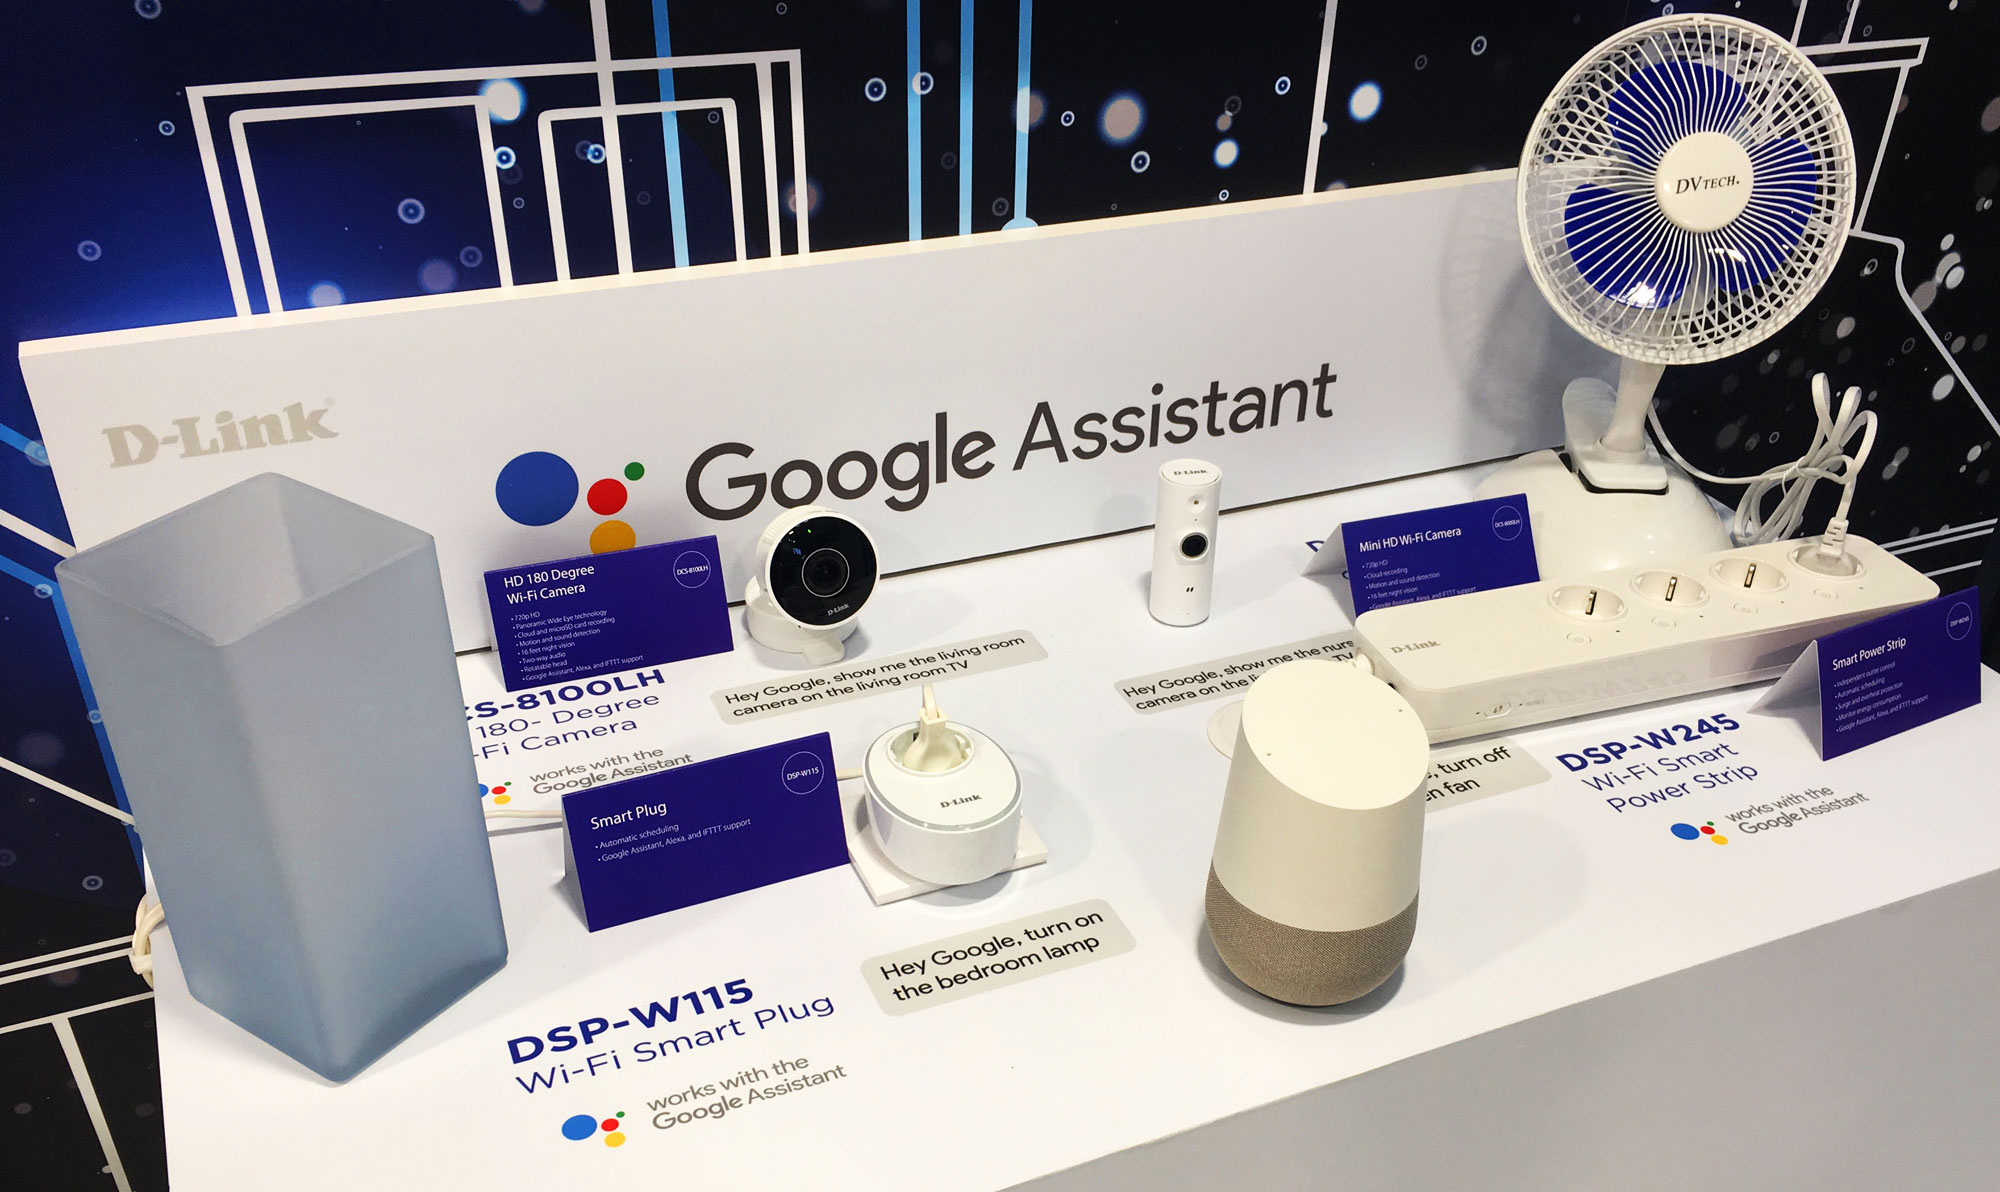 Google Assistant compatible D-Link products